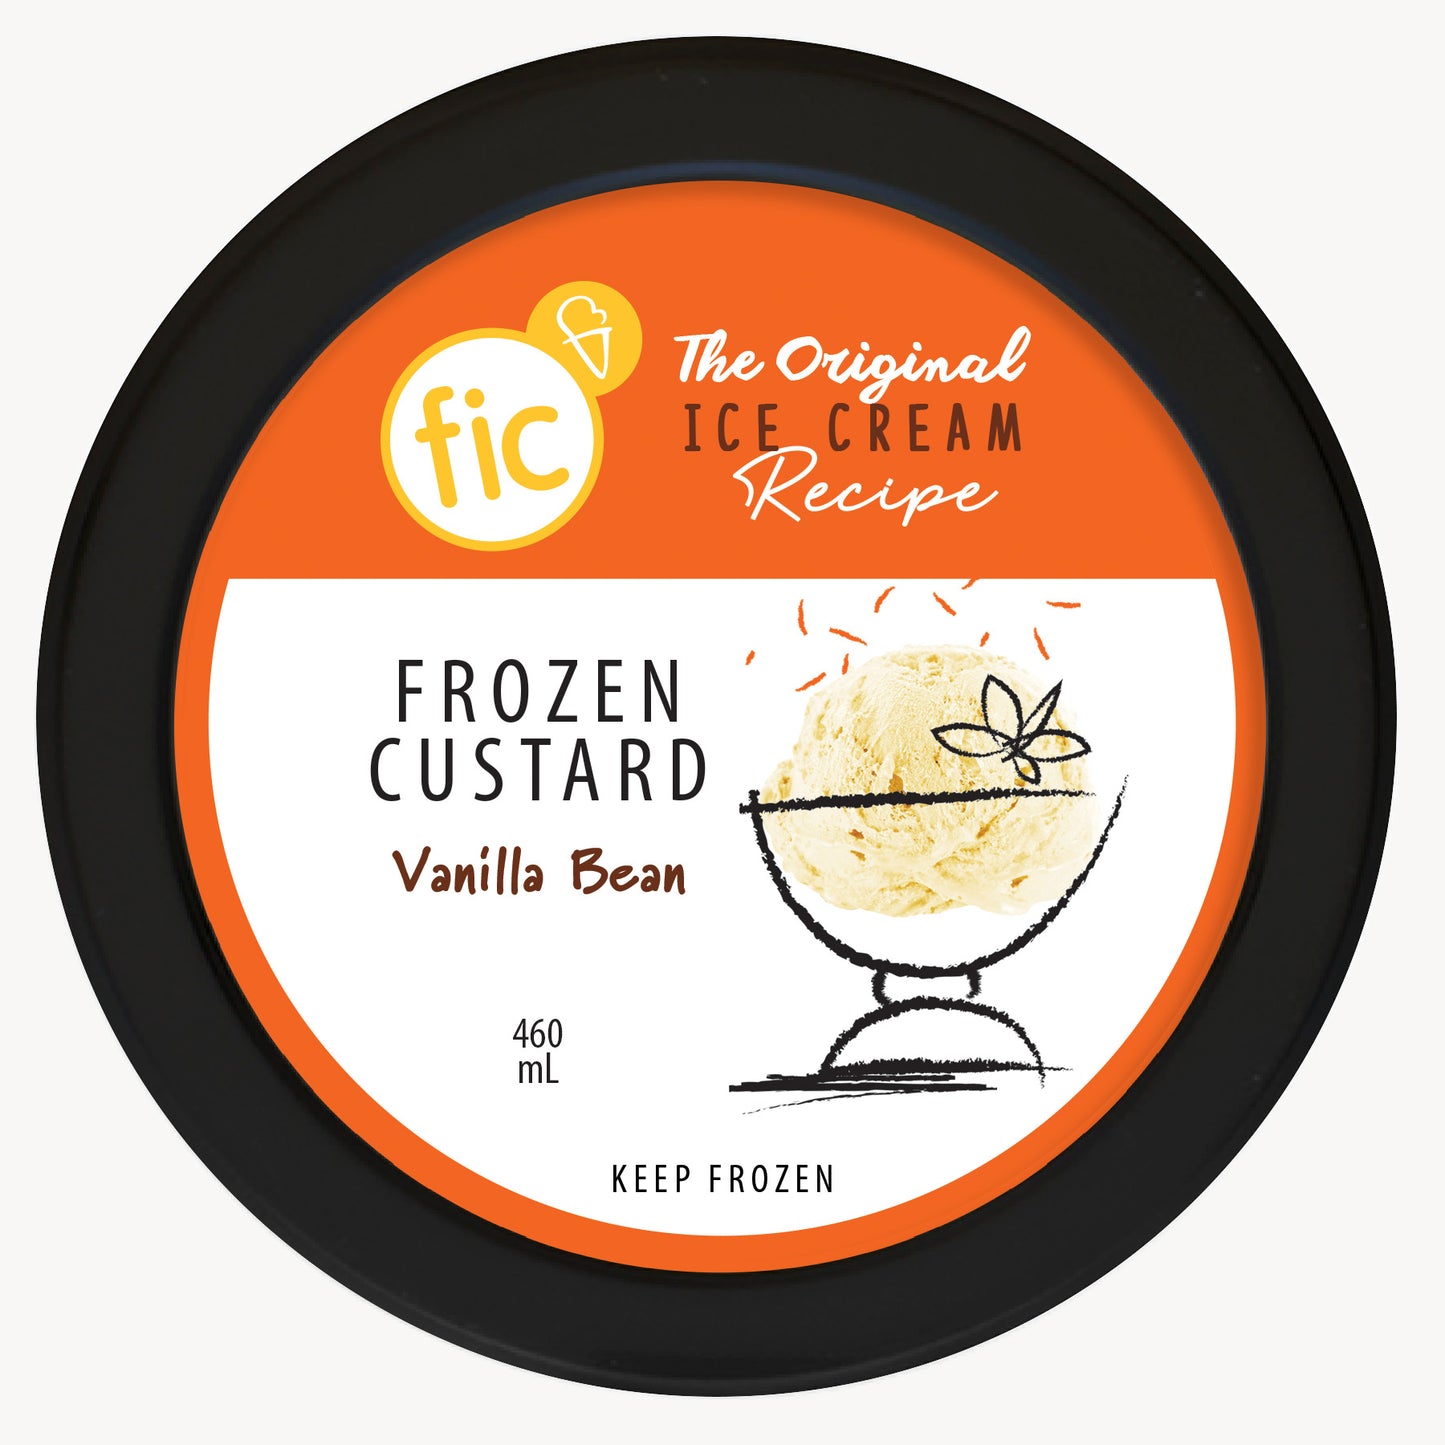 FIC Fruits in Ice Cream